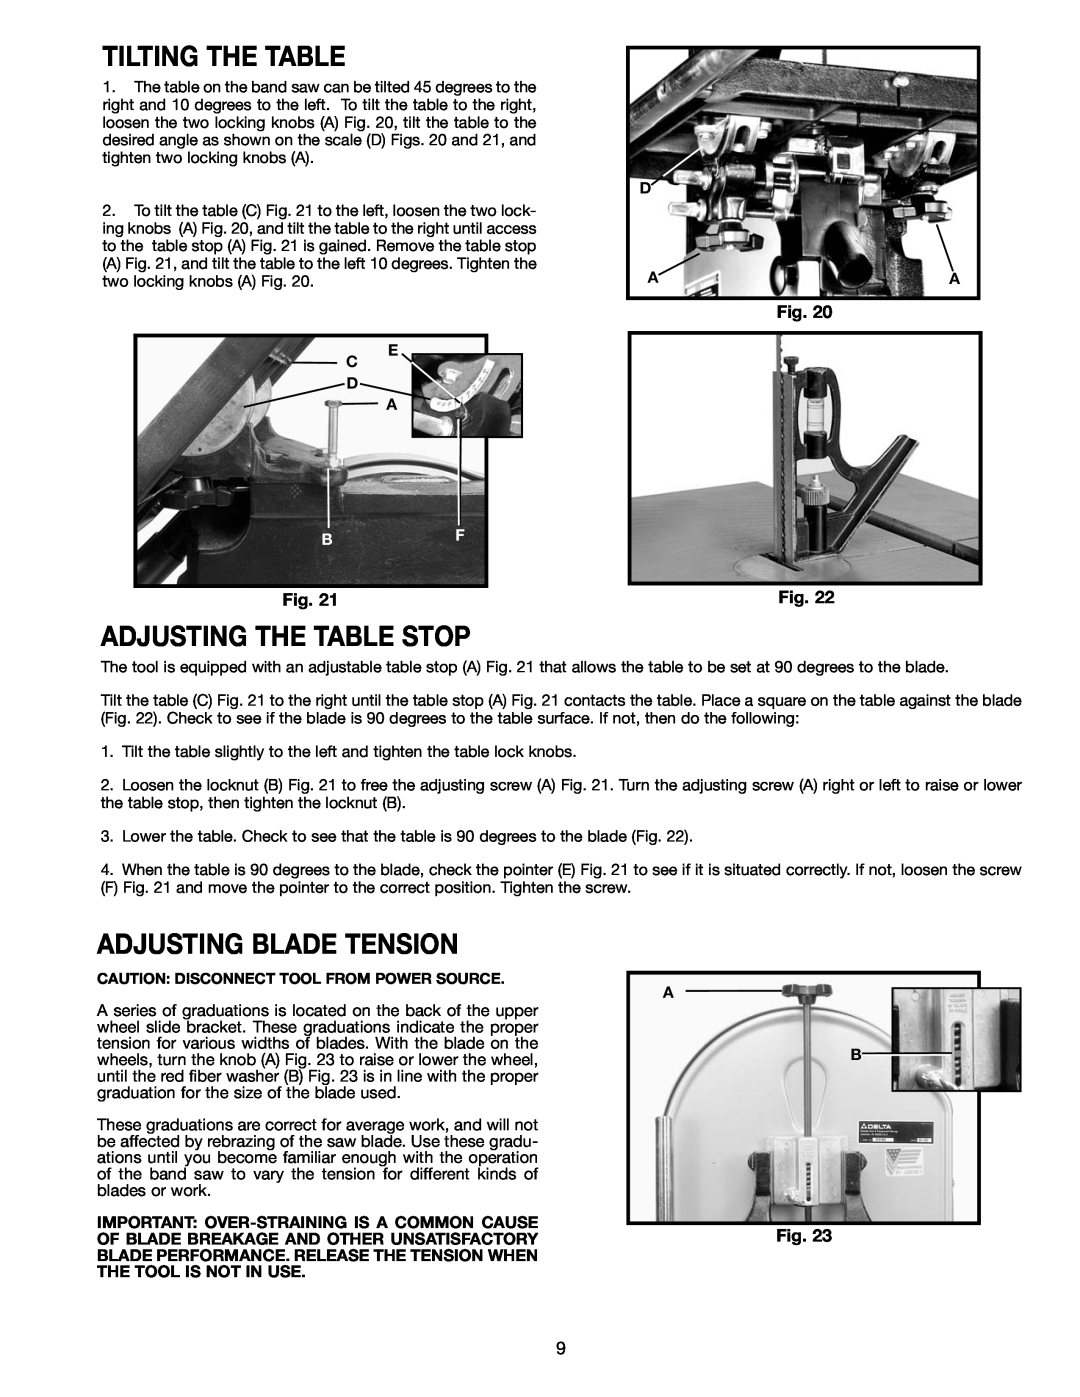 Delta 28-241, 28-299A instruction manual Tilting The Table, Adjusting The Table Stop, Adjusting Blade Tension, D Aa, E C D A 